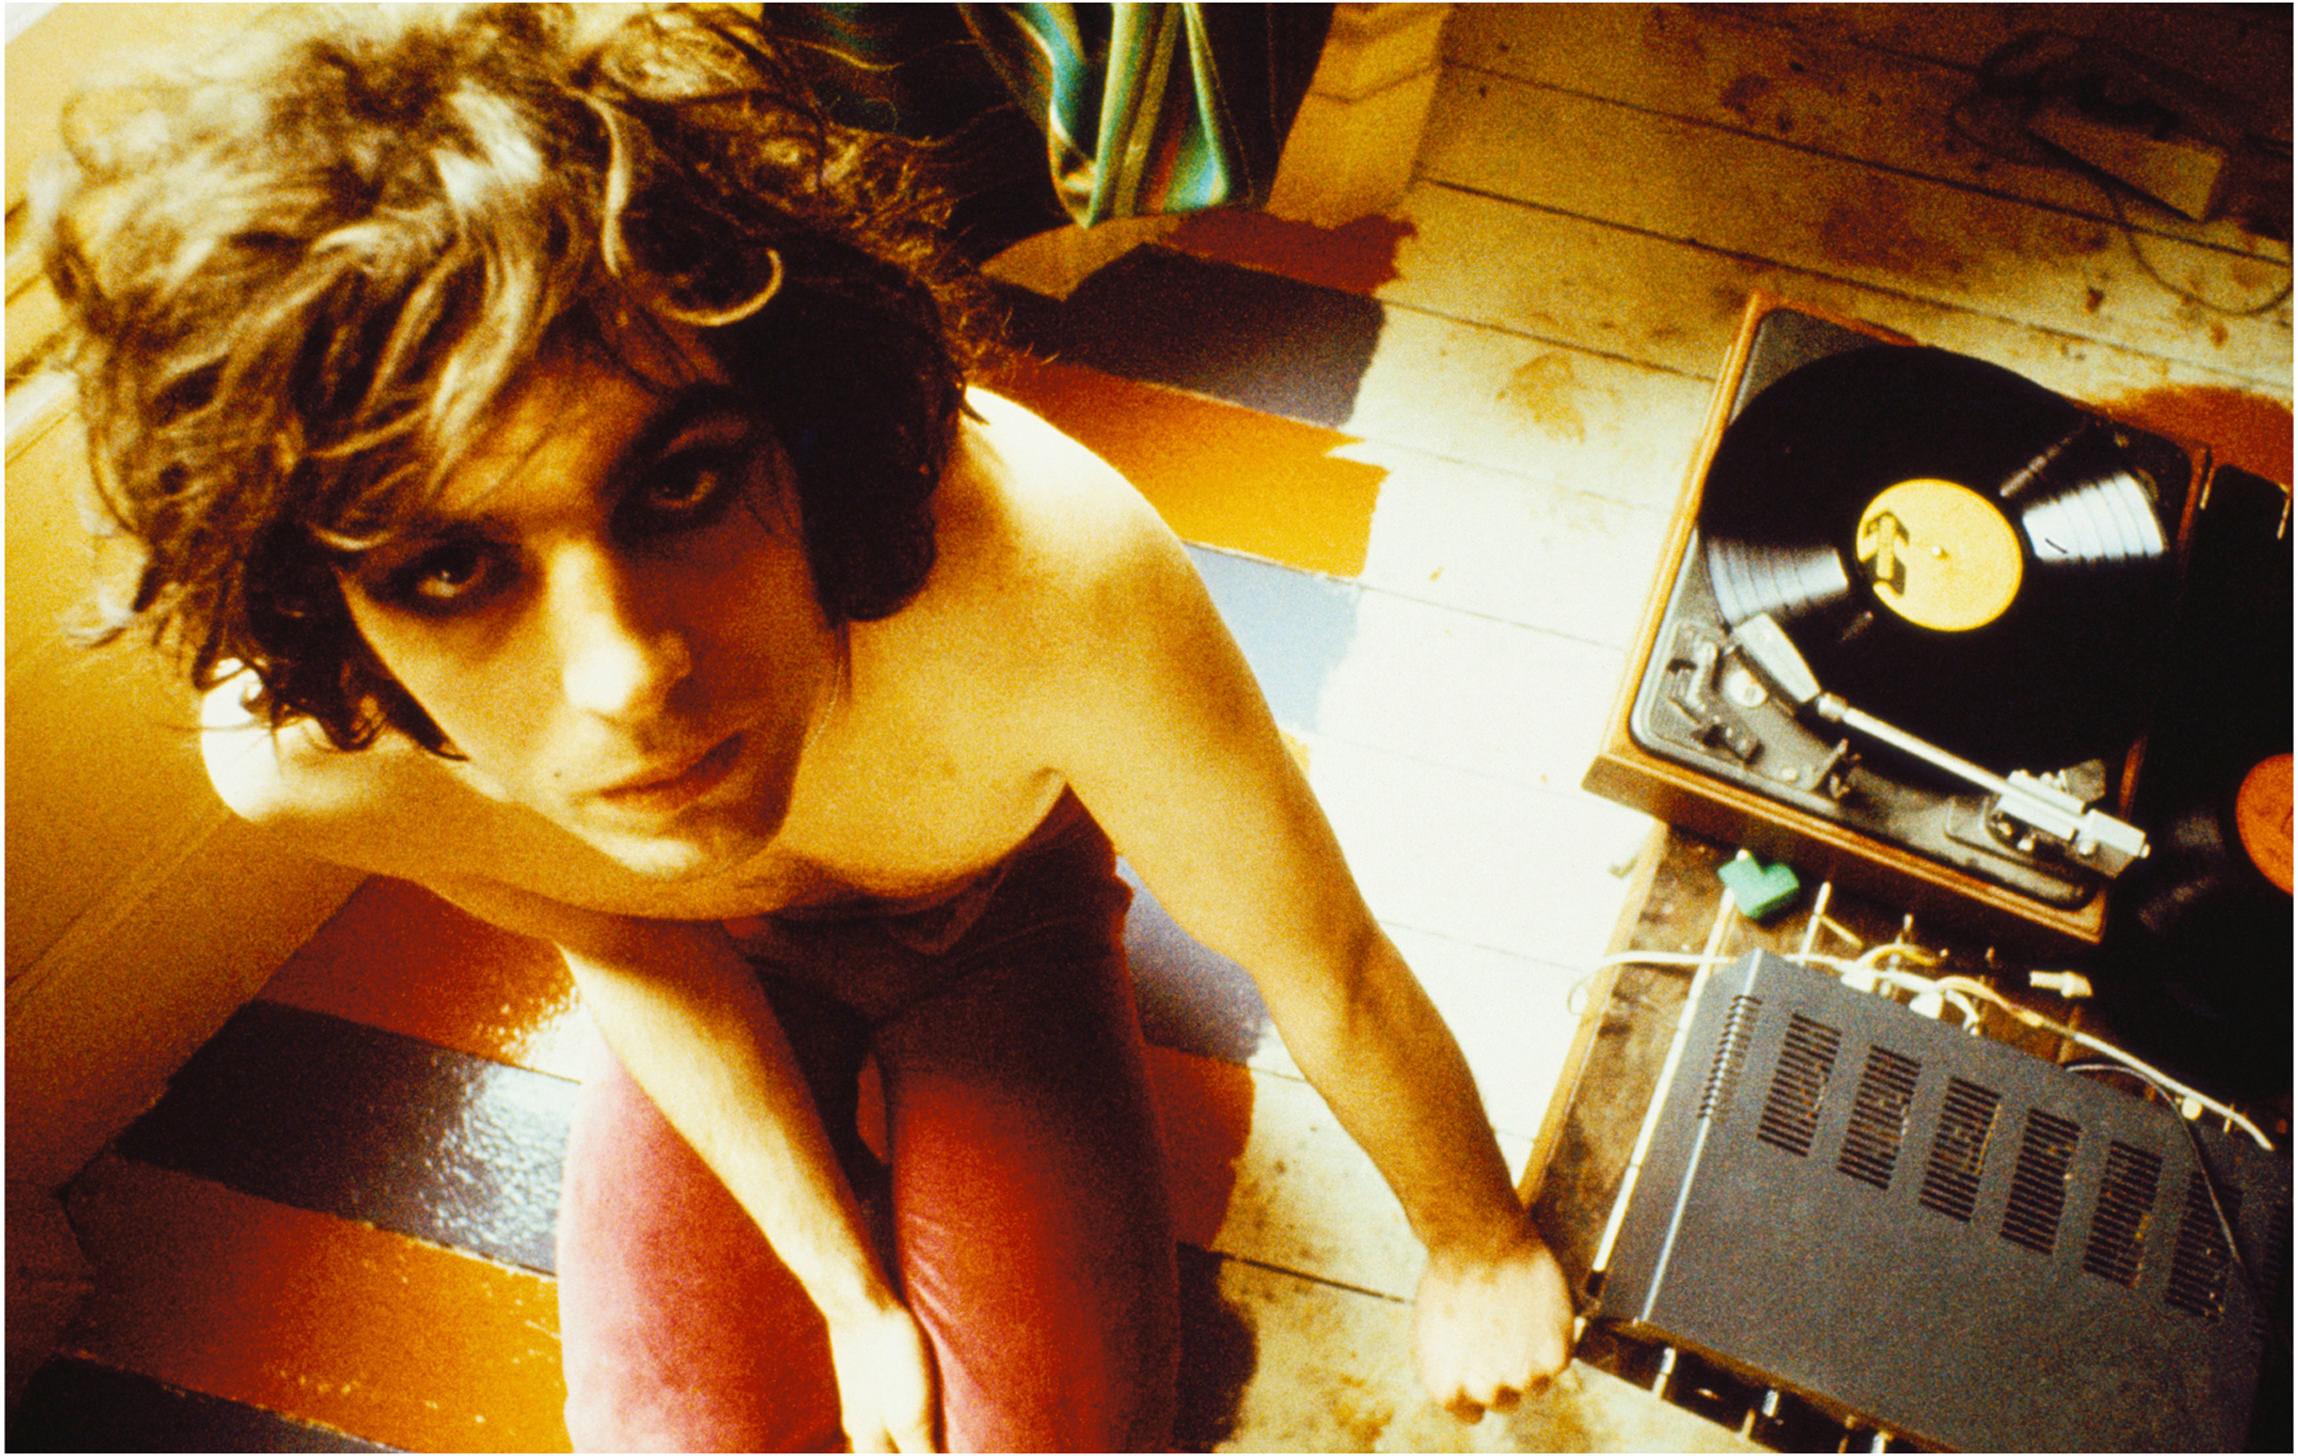 Mick Rock Portrait Photograph - Syd Barrett